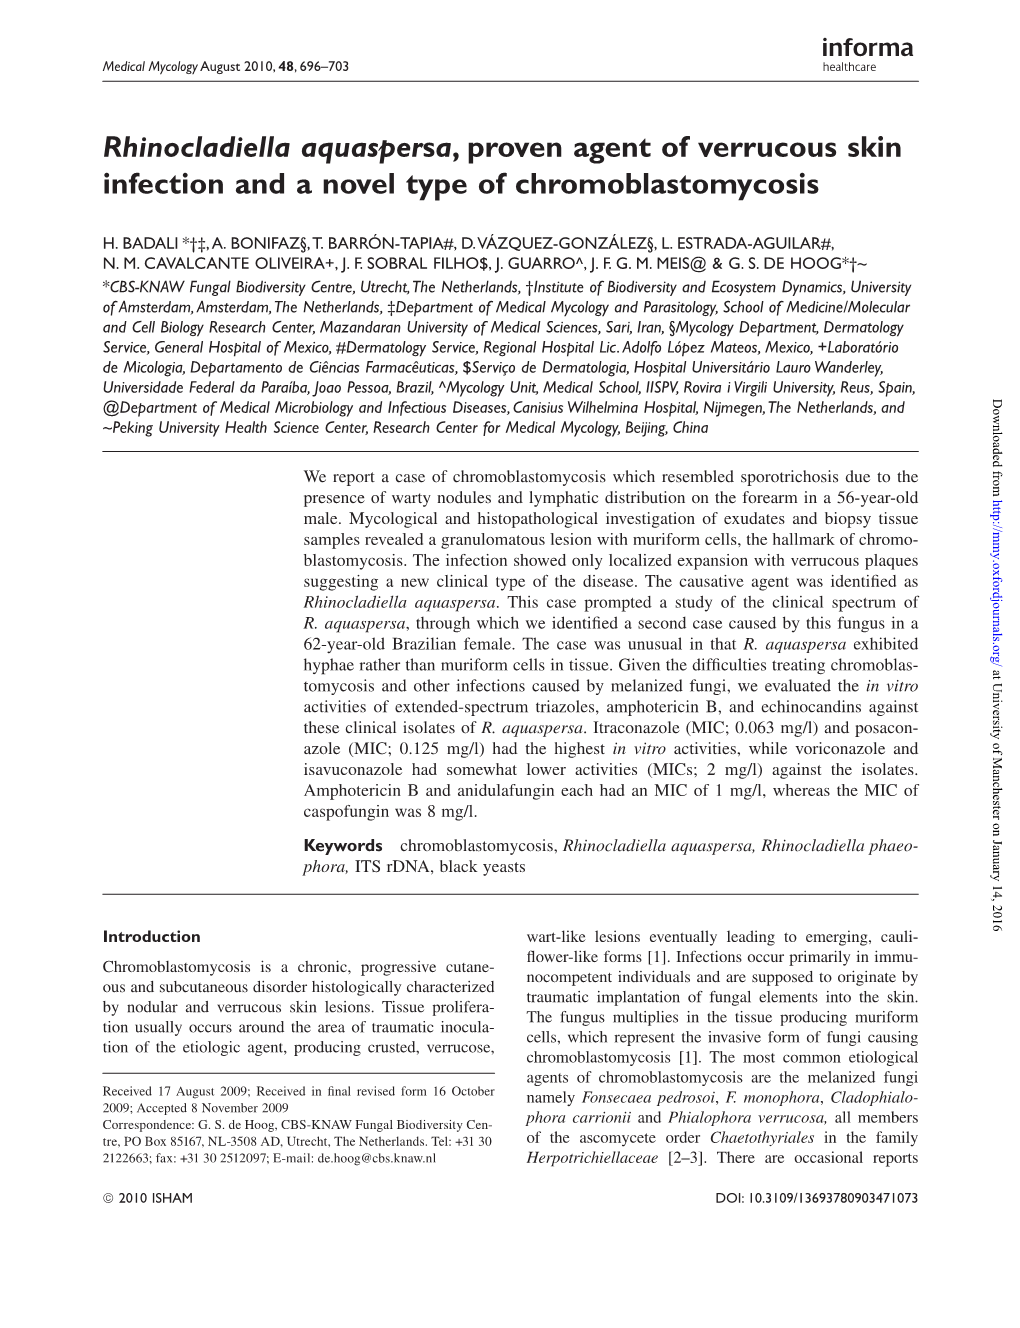 Rhinocladiella Aquaspersa, Proven Agent of Verrucous Skin Infection and a Novel Type of Chromoblastomycosis